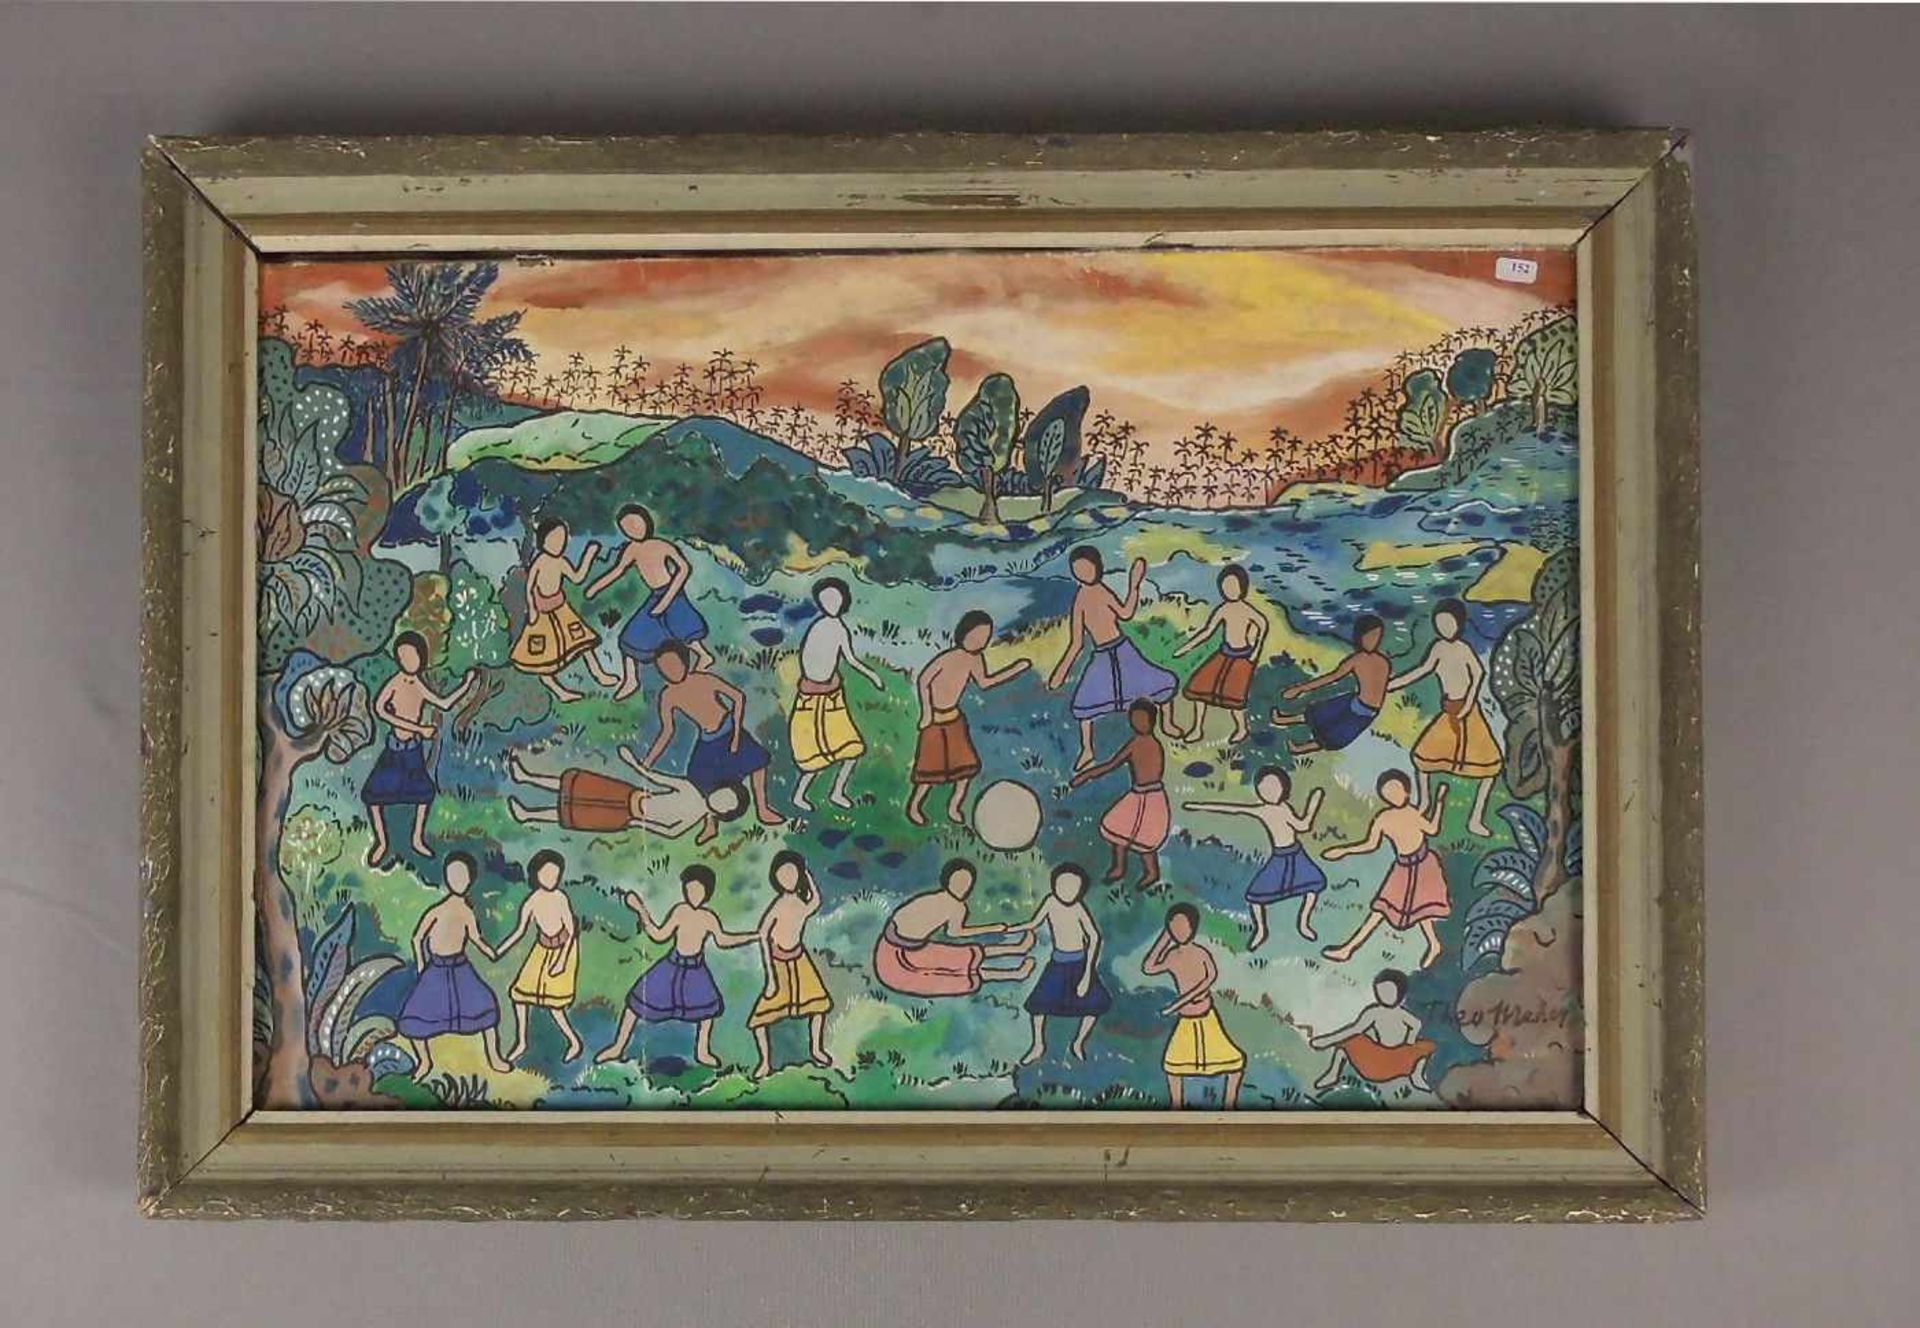 MEIER, THEO (auch Theomeier, Basel 1908-1982), Gemälde / painting: "Balinesisches Volksfest",